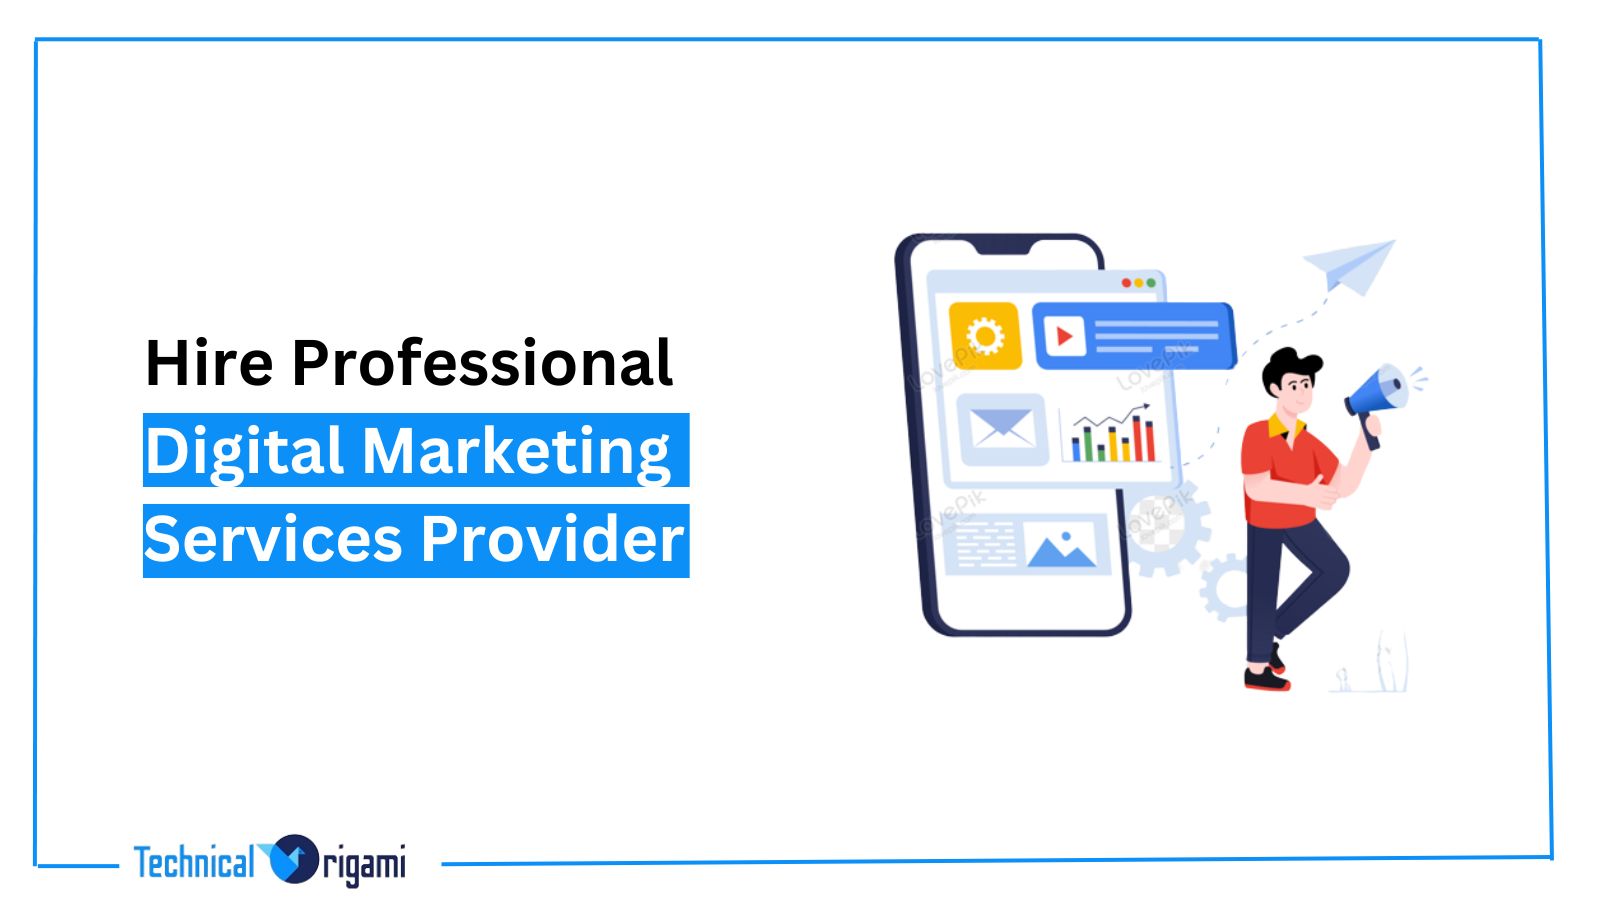 Digital marketing service provider | Technical Origami